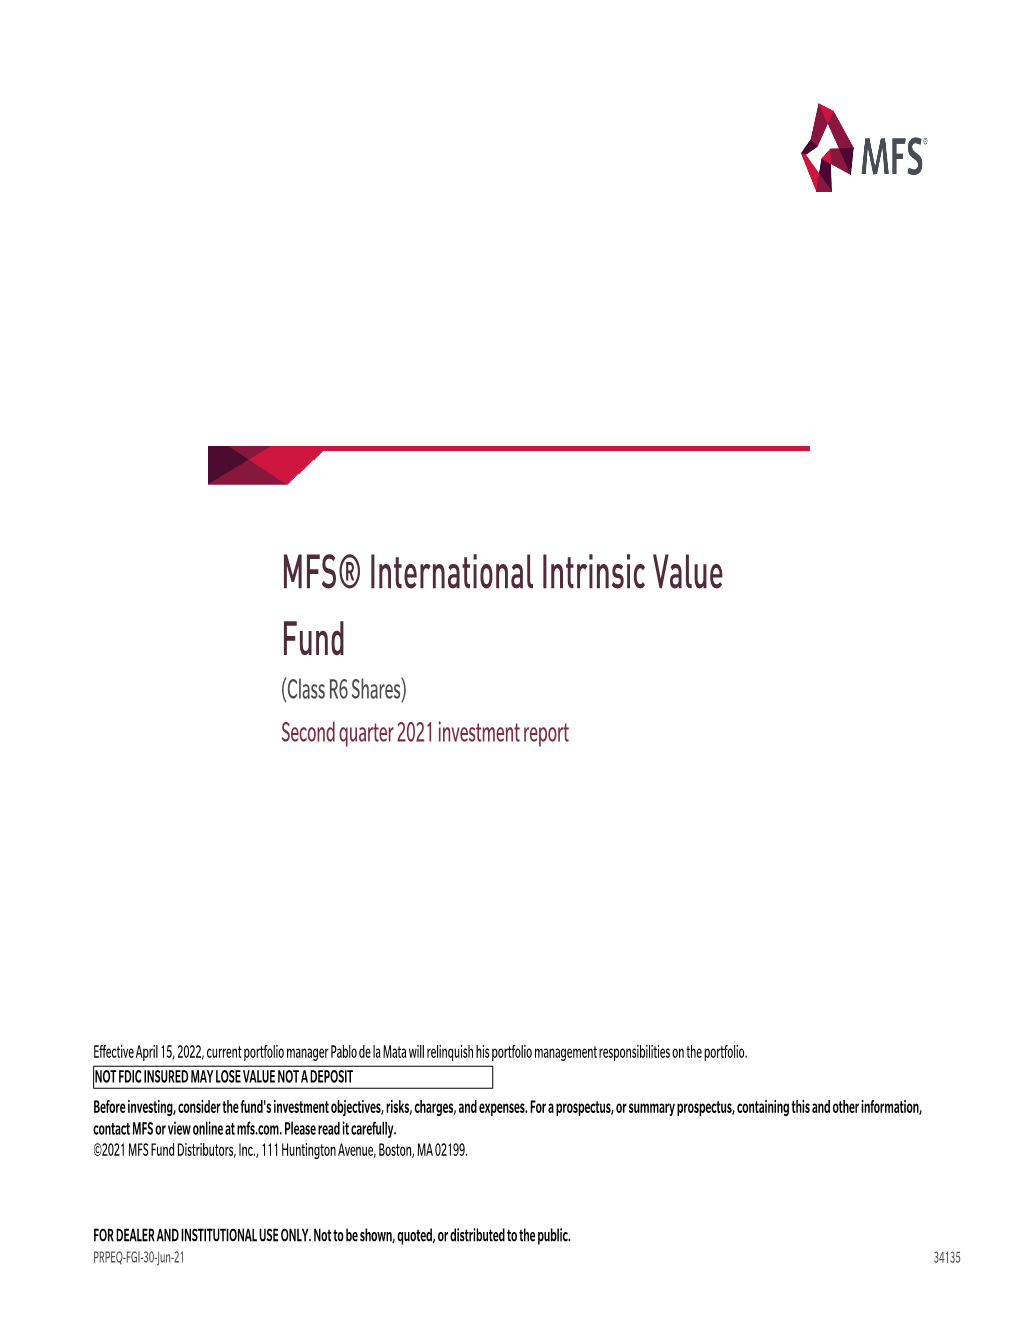 MFS® International Intrinsic Value Fund (Class R6 Shares) Second Quarter 2021 Investment Report